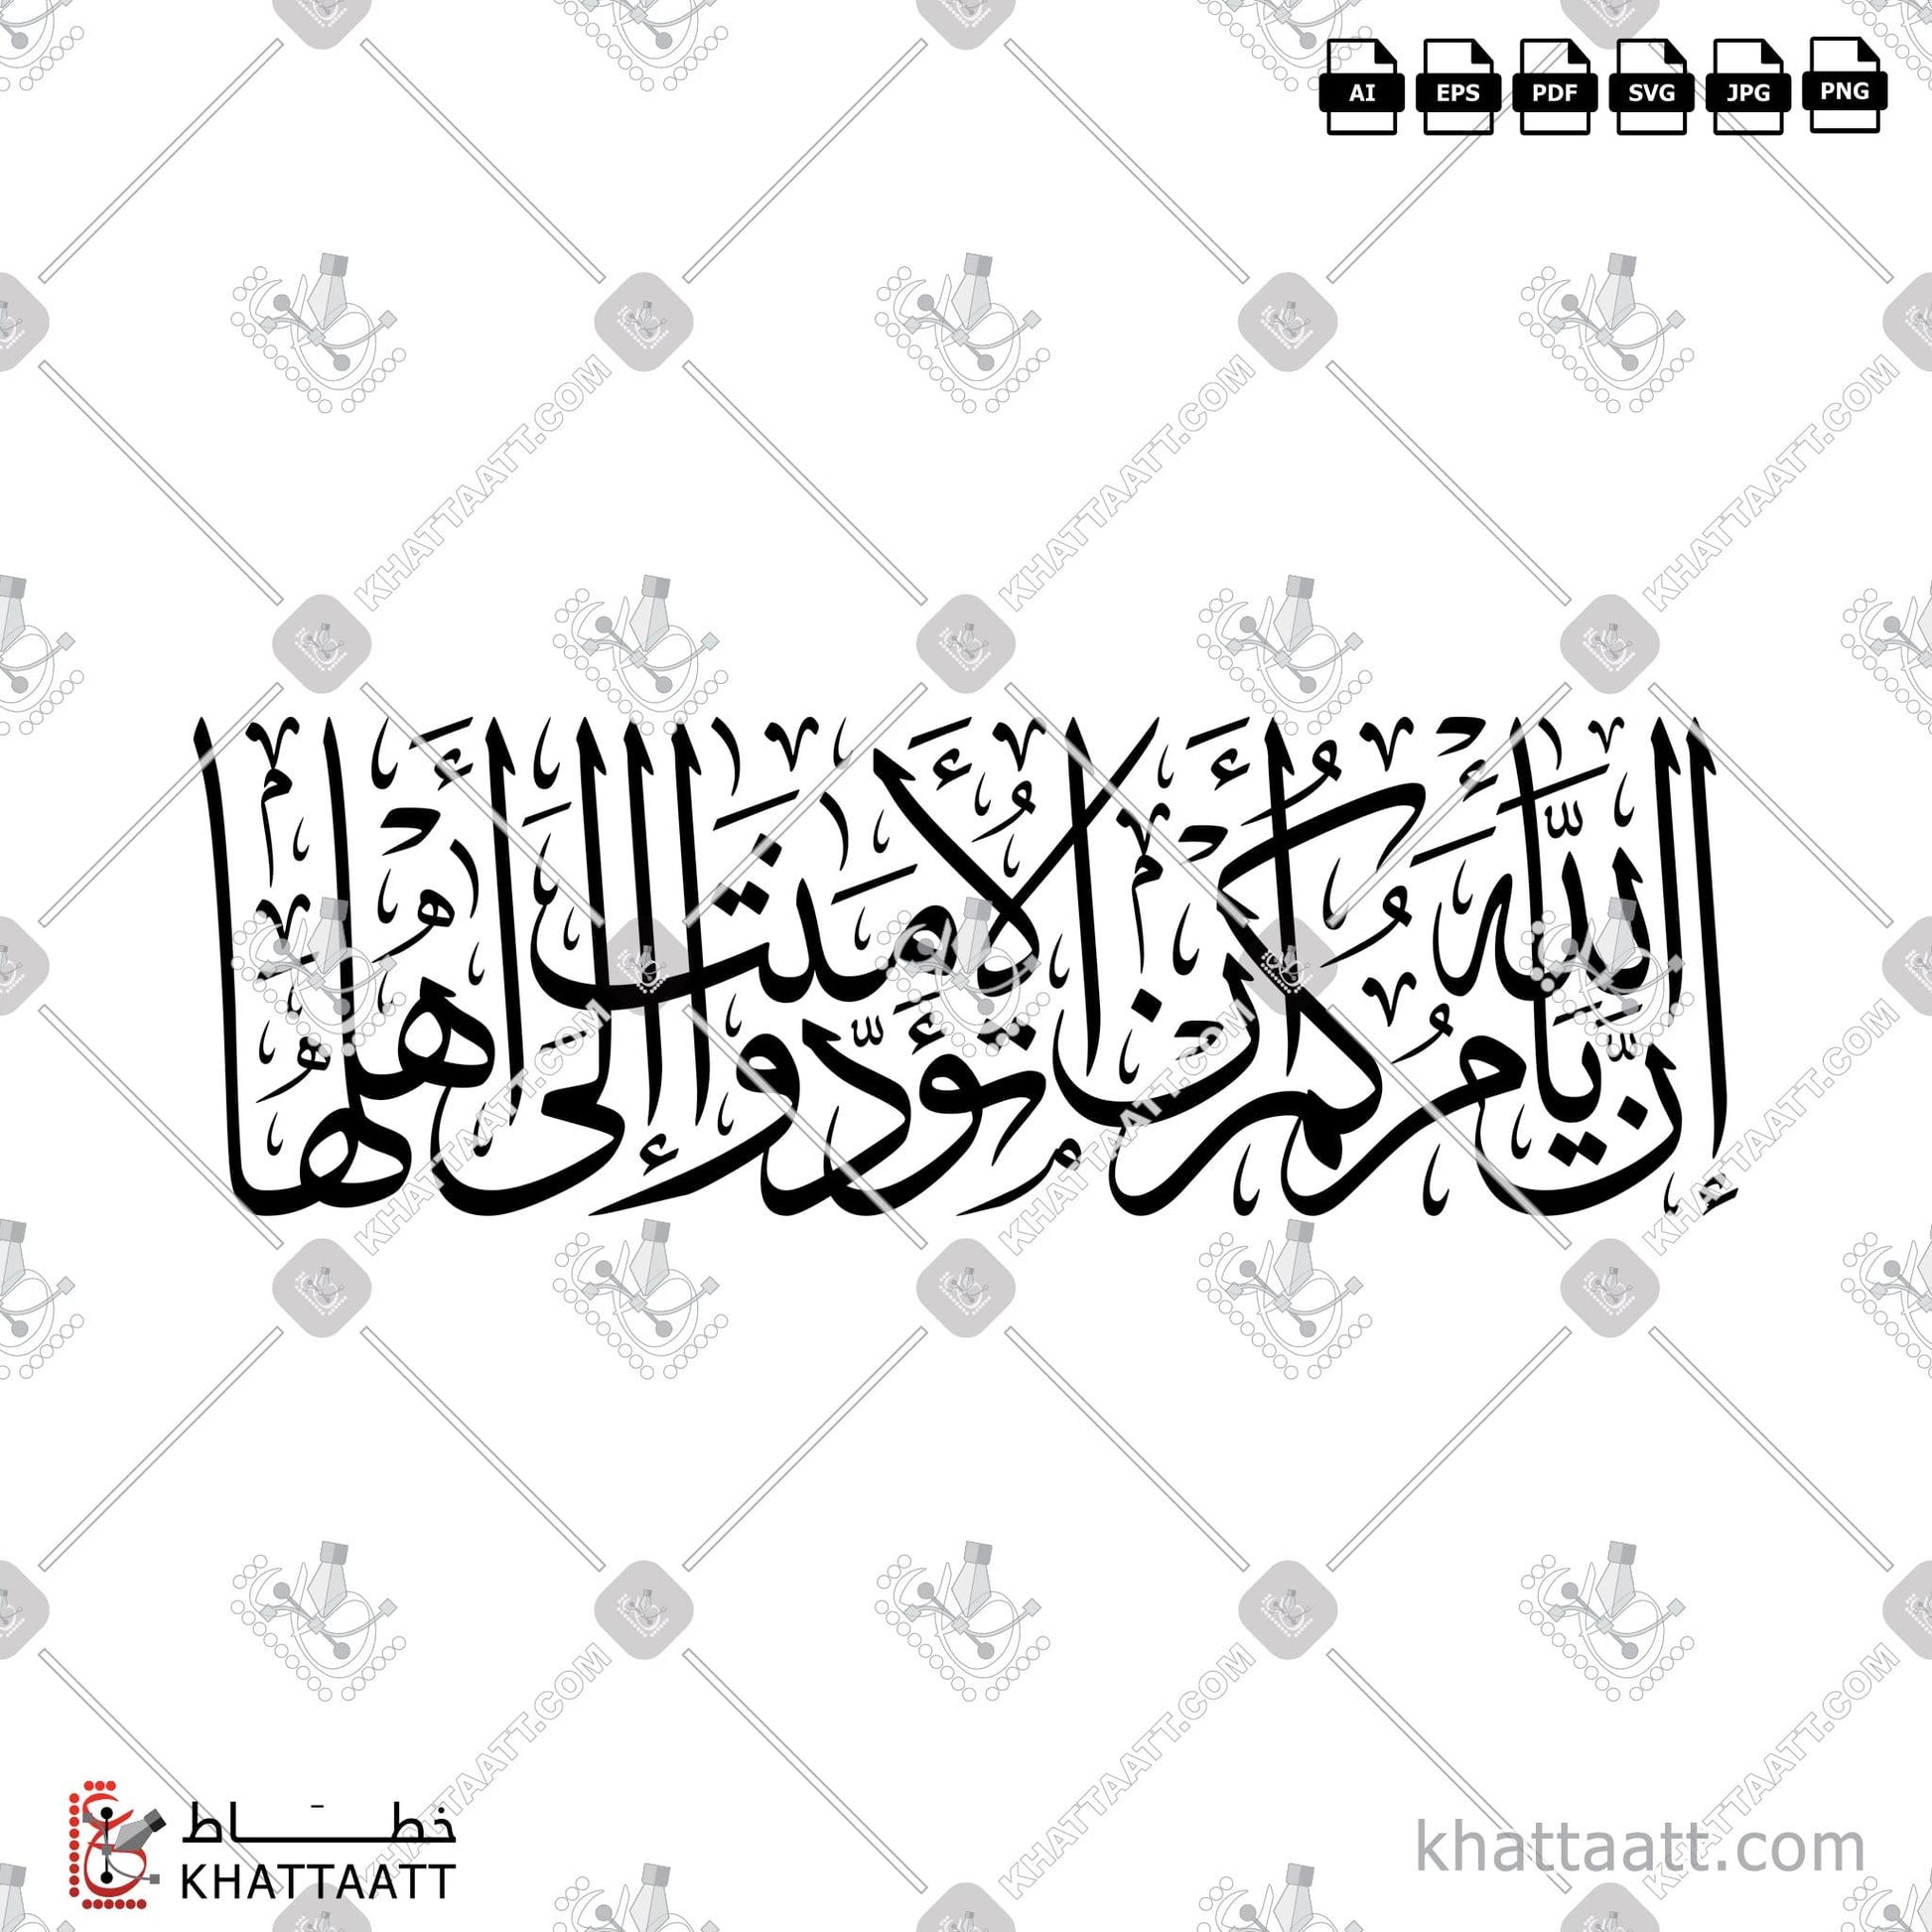 Download Arabic Calligraphy of إن الله يأمركم أن تؤدوا الأمانات إلى أهلها in Thuluth - خط الثلث in vector and .png